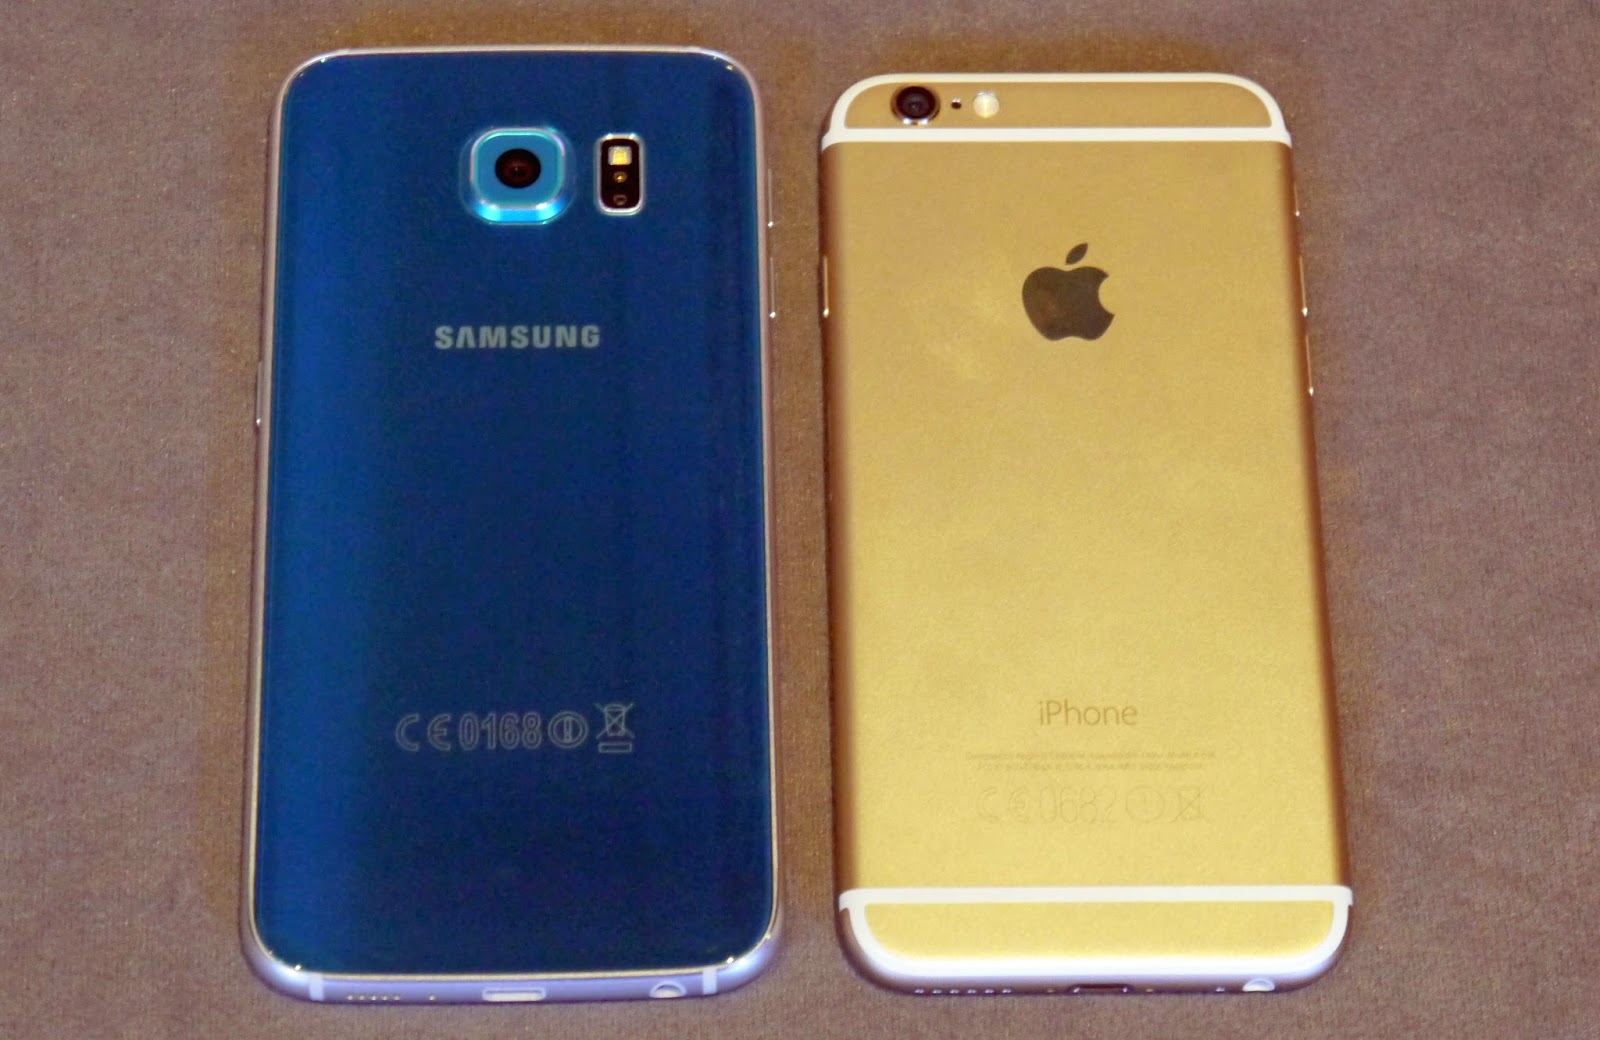 Самсунг 6 и 6 сравнение. Iphone 6s vs Samsung Galaxy s6.